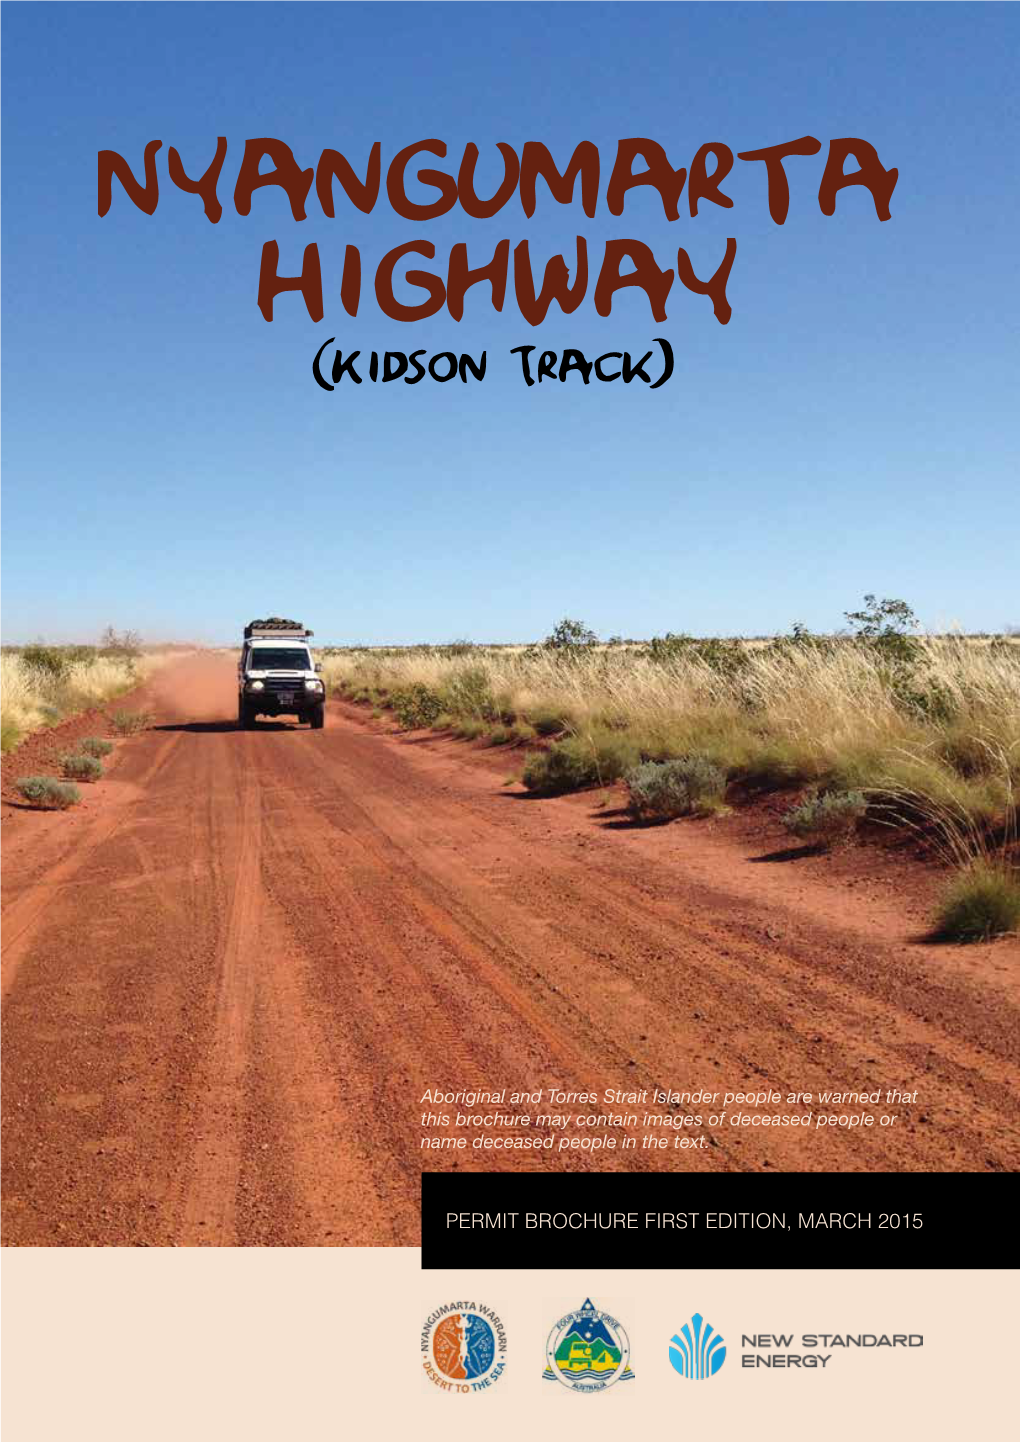 Download the Nyangumarta Highway (Kidson Track)